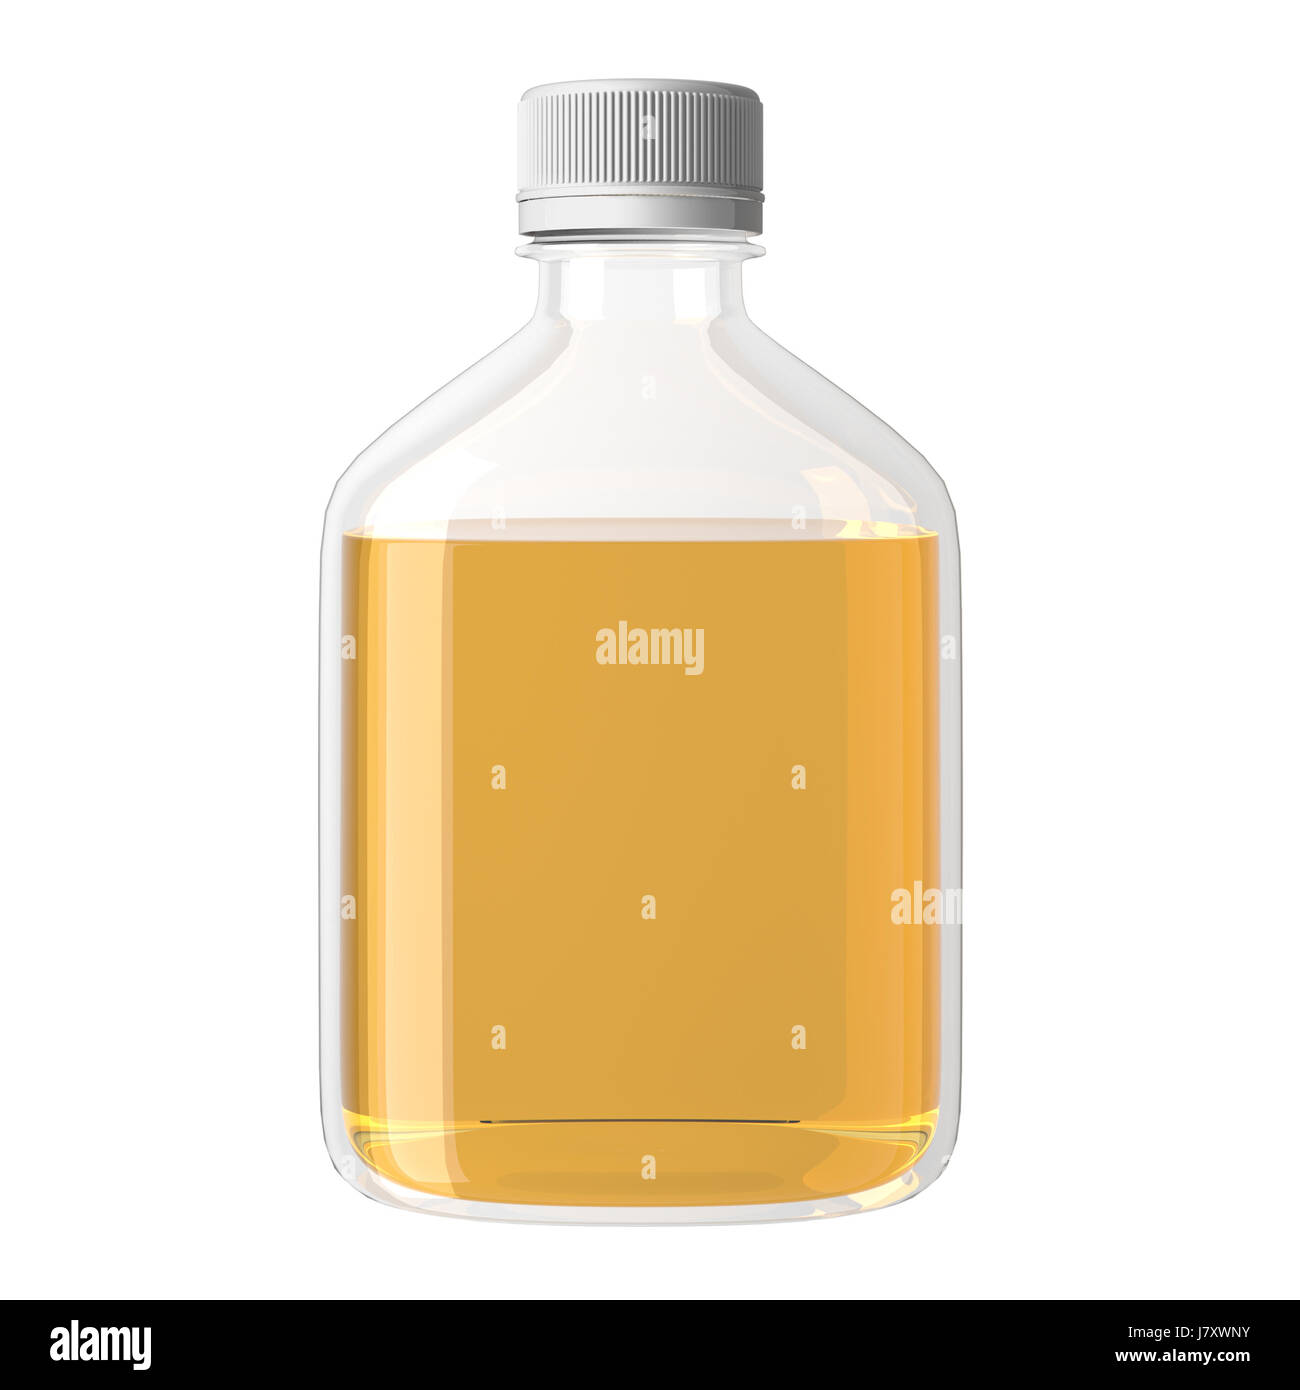 Glass Bottle Mockup Realistic Glass Bottle With Lliquid Isolated On Background 3d Rendering Image Stock Photo Alamy